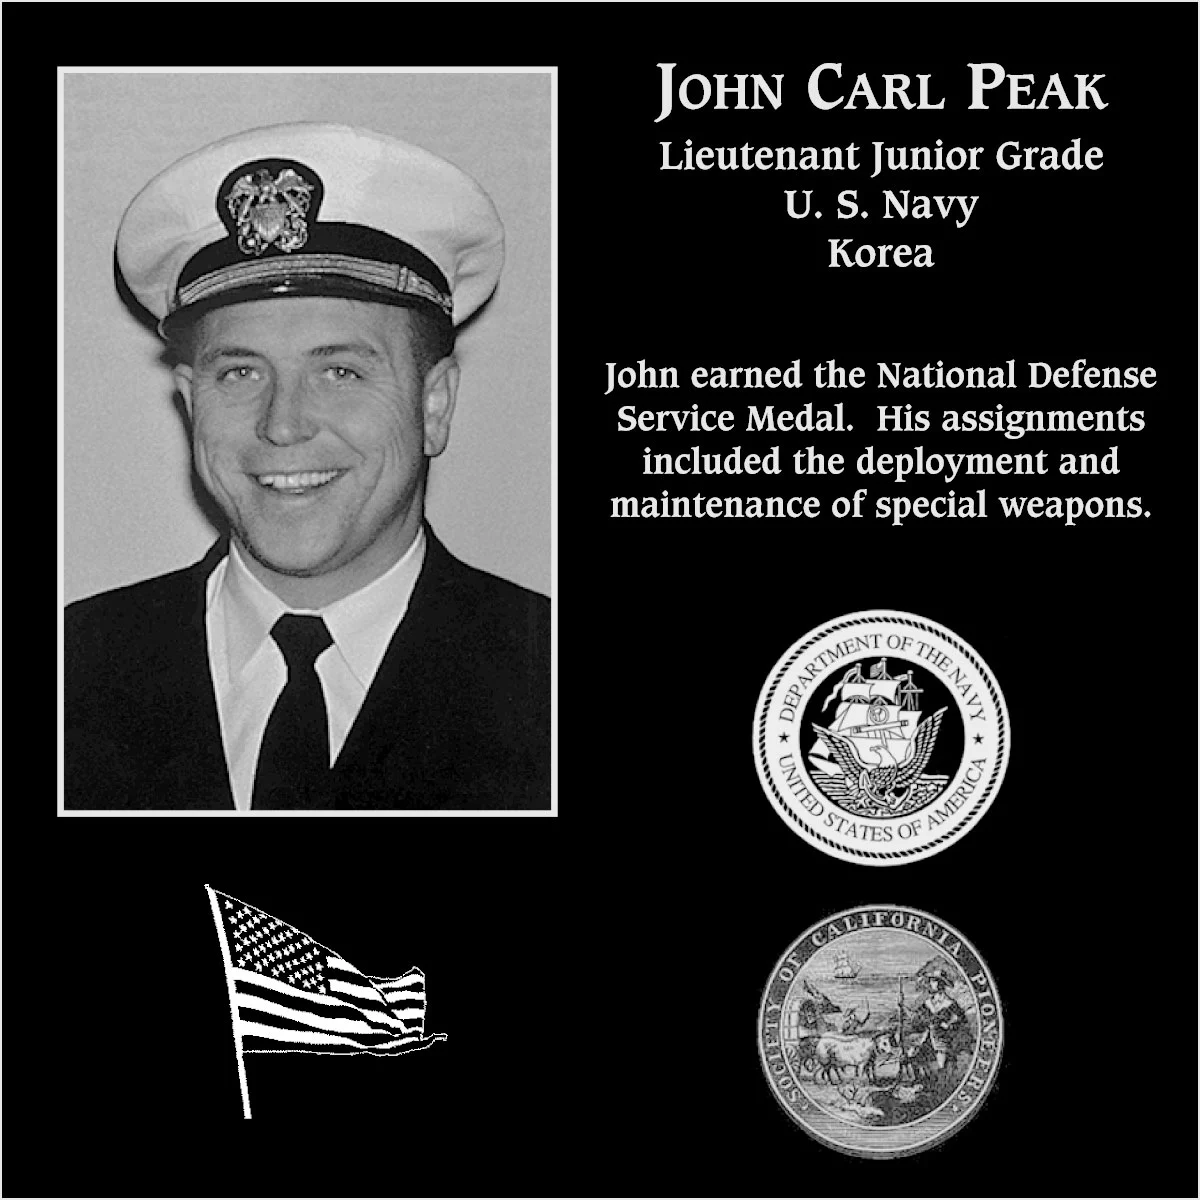 John Carl Peak